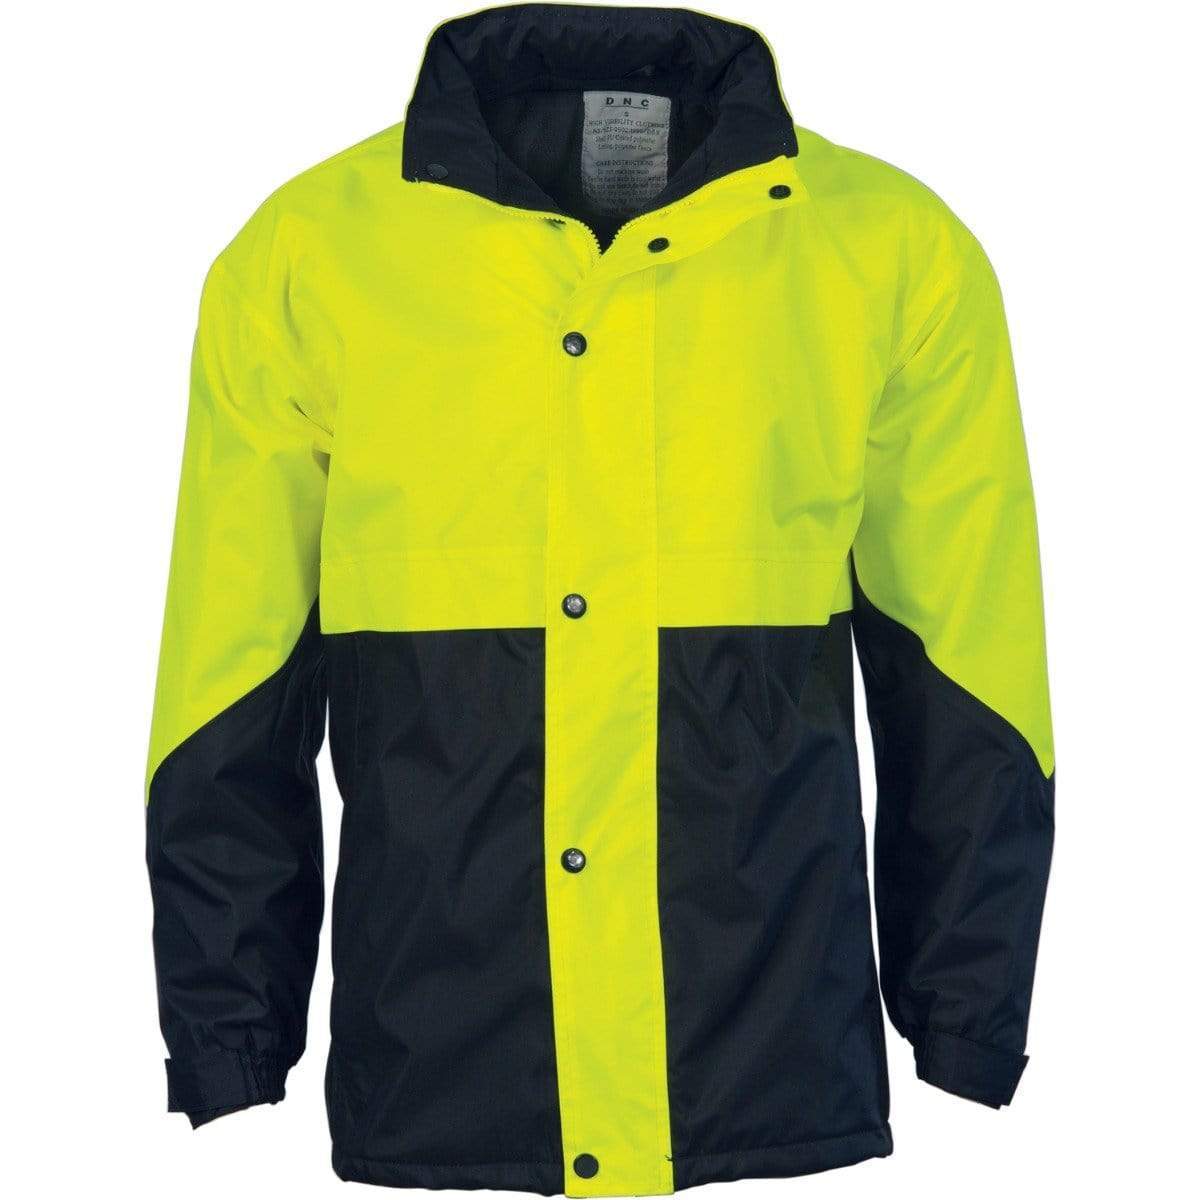 Dnc Workwear Hi-vis Two-tone Classic Jacket - 3866 Work Wear DNC Workwear Yellow/Navy S 